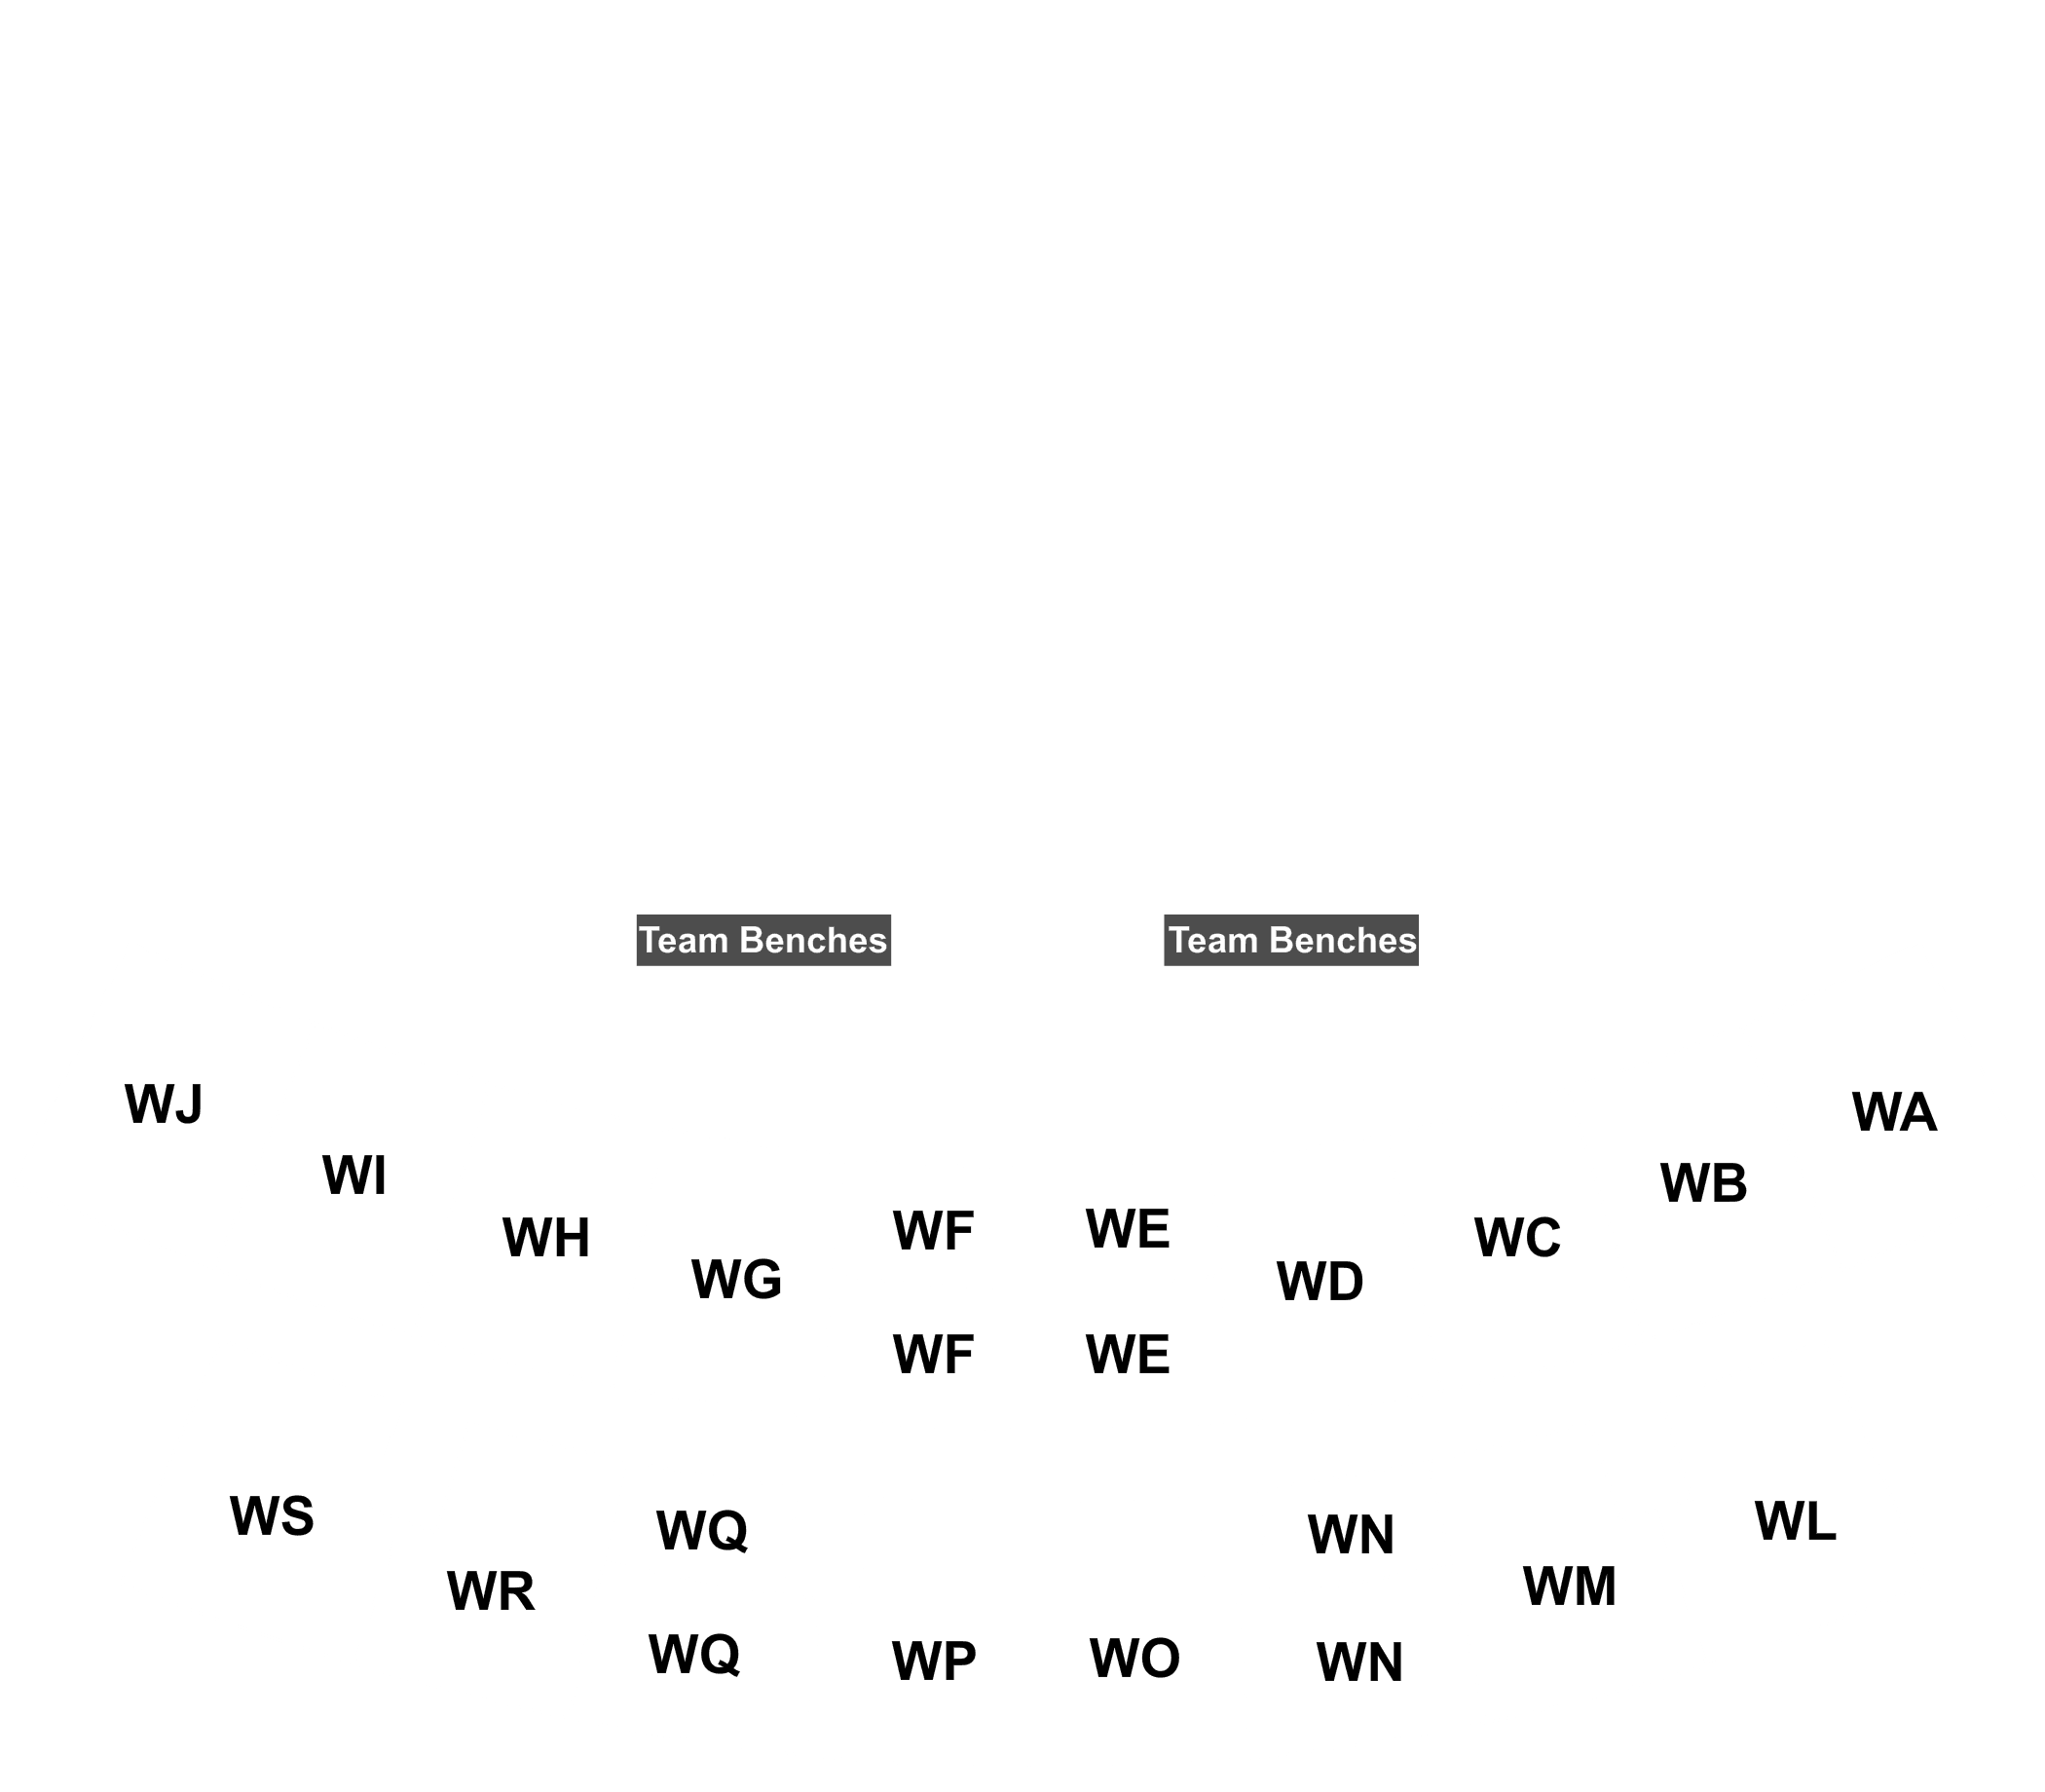 Lehigh Goodman Stadium Seating Chart